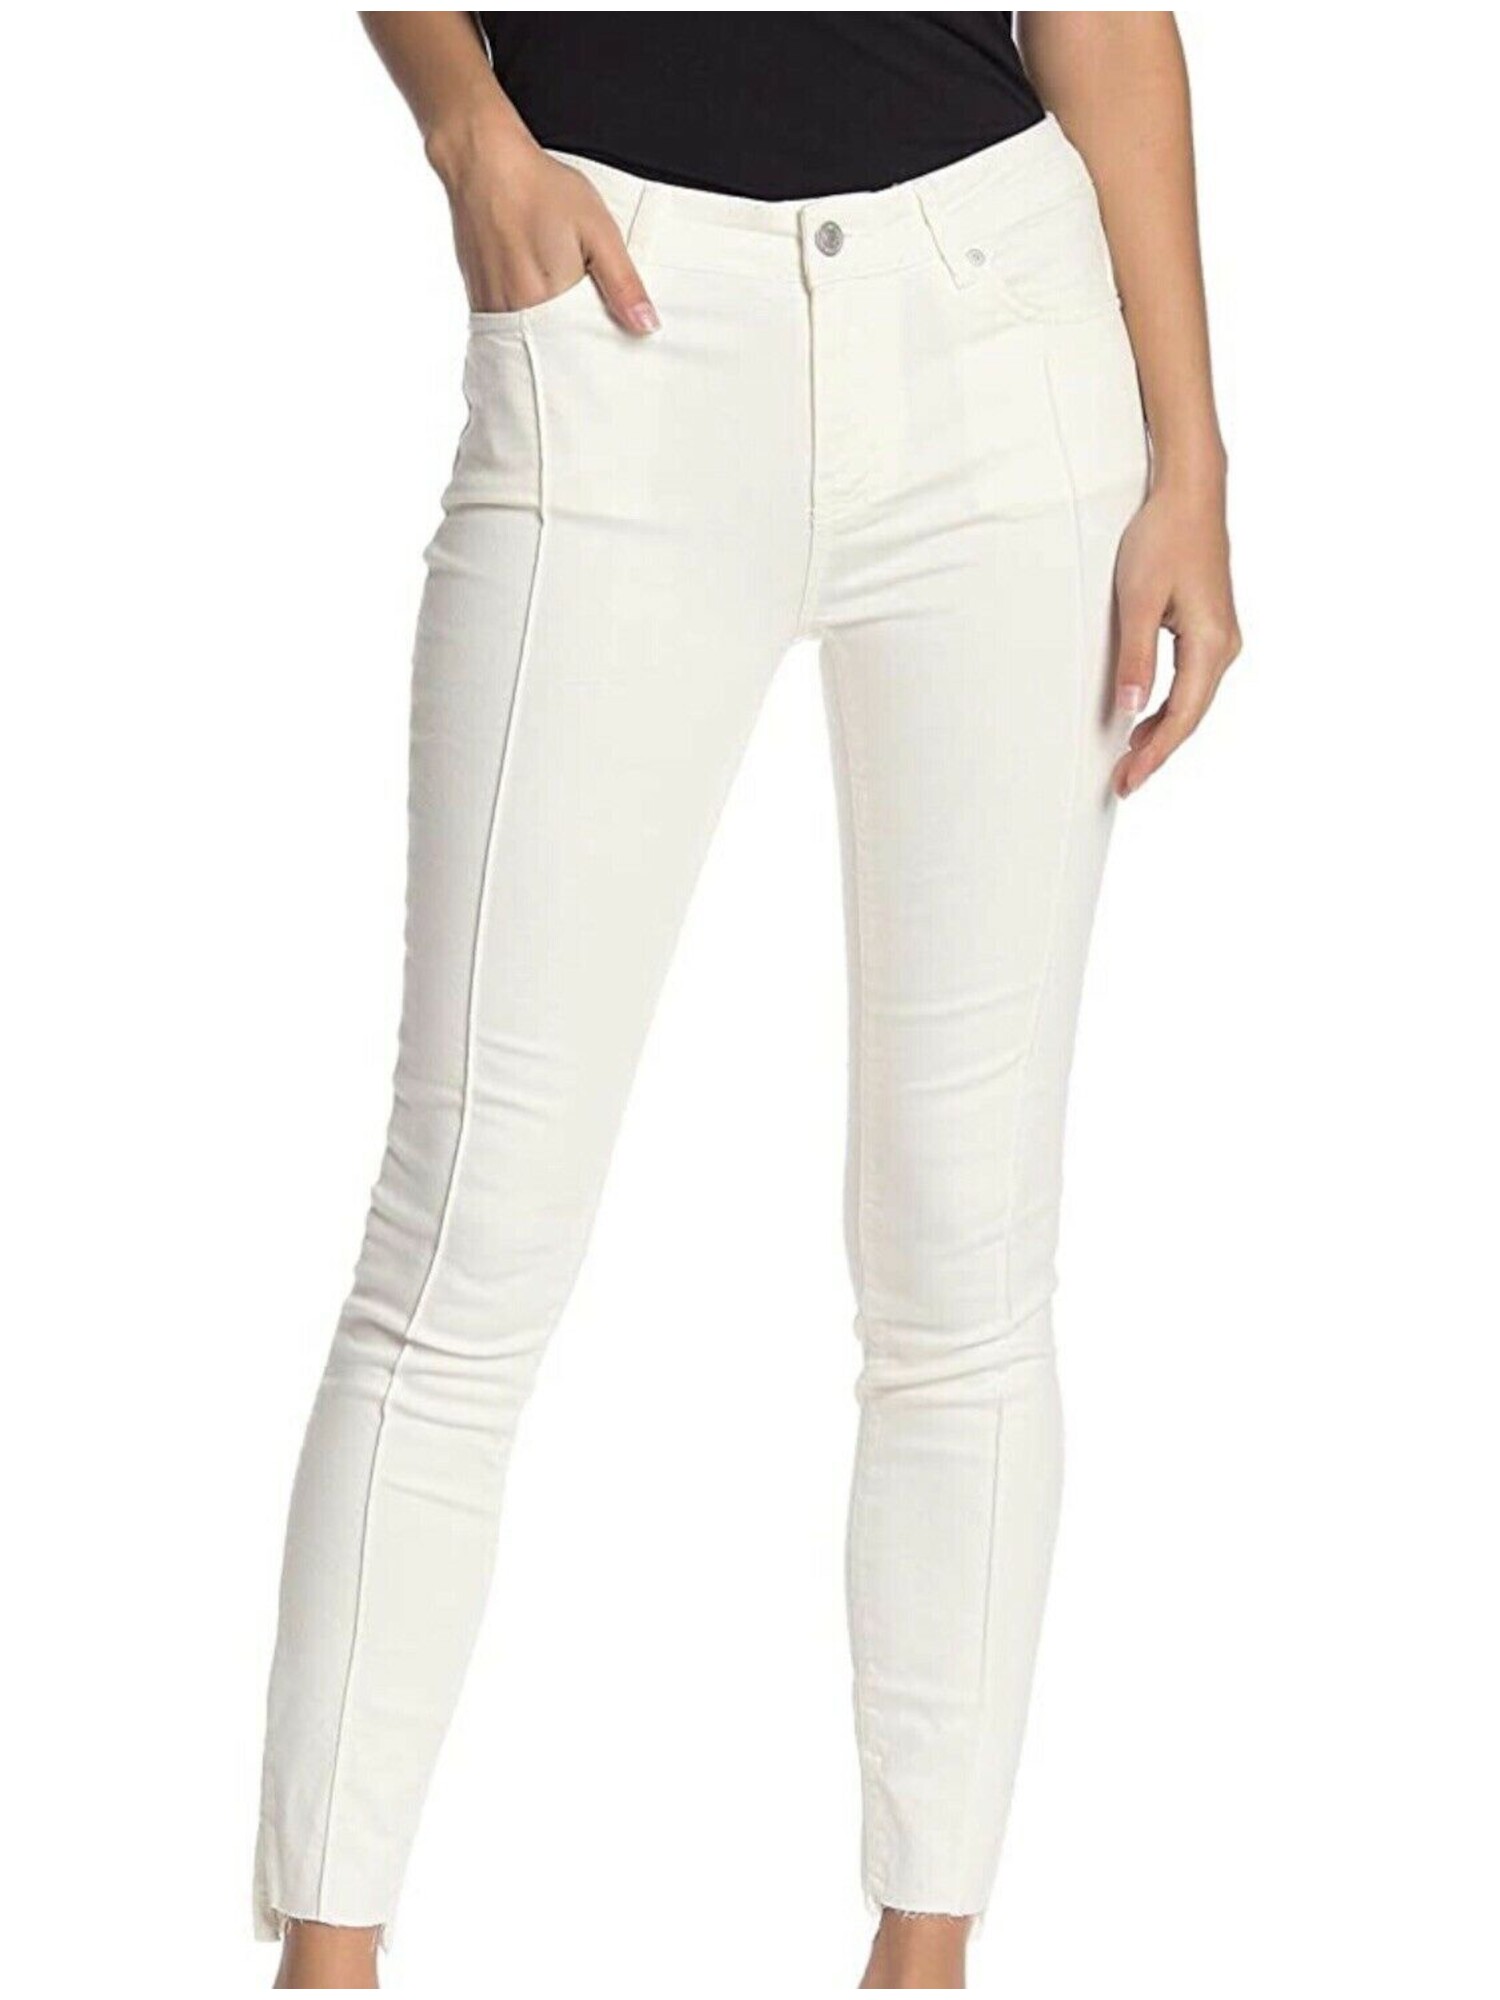 FREE PEOPLE Womens White Frayed Raw Hem Skinny Jeans 27R